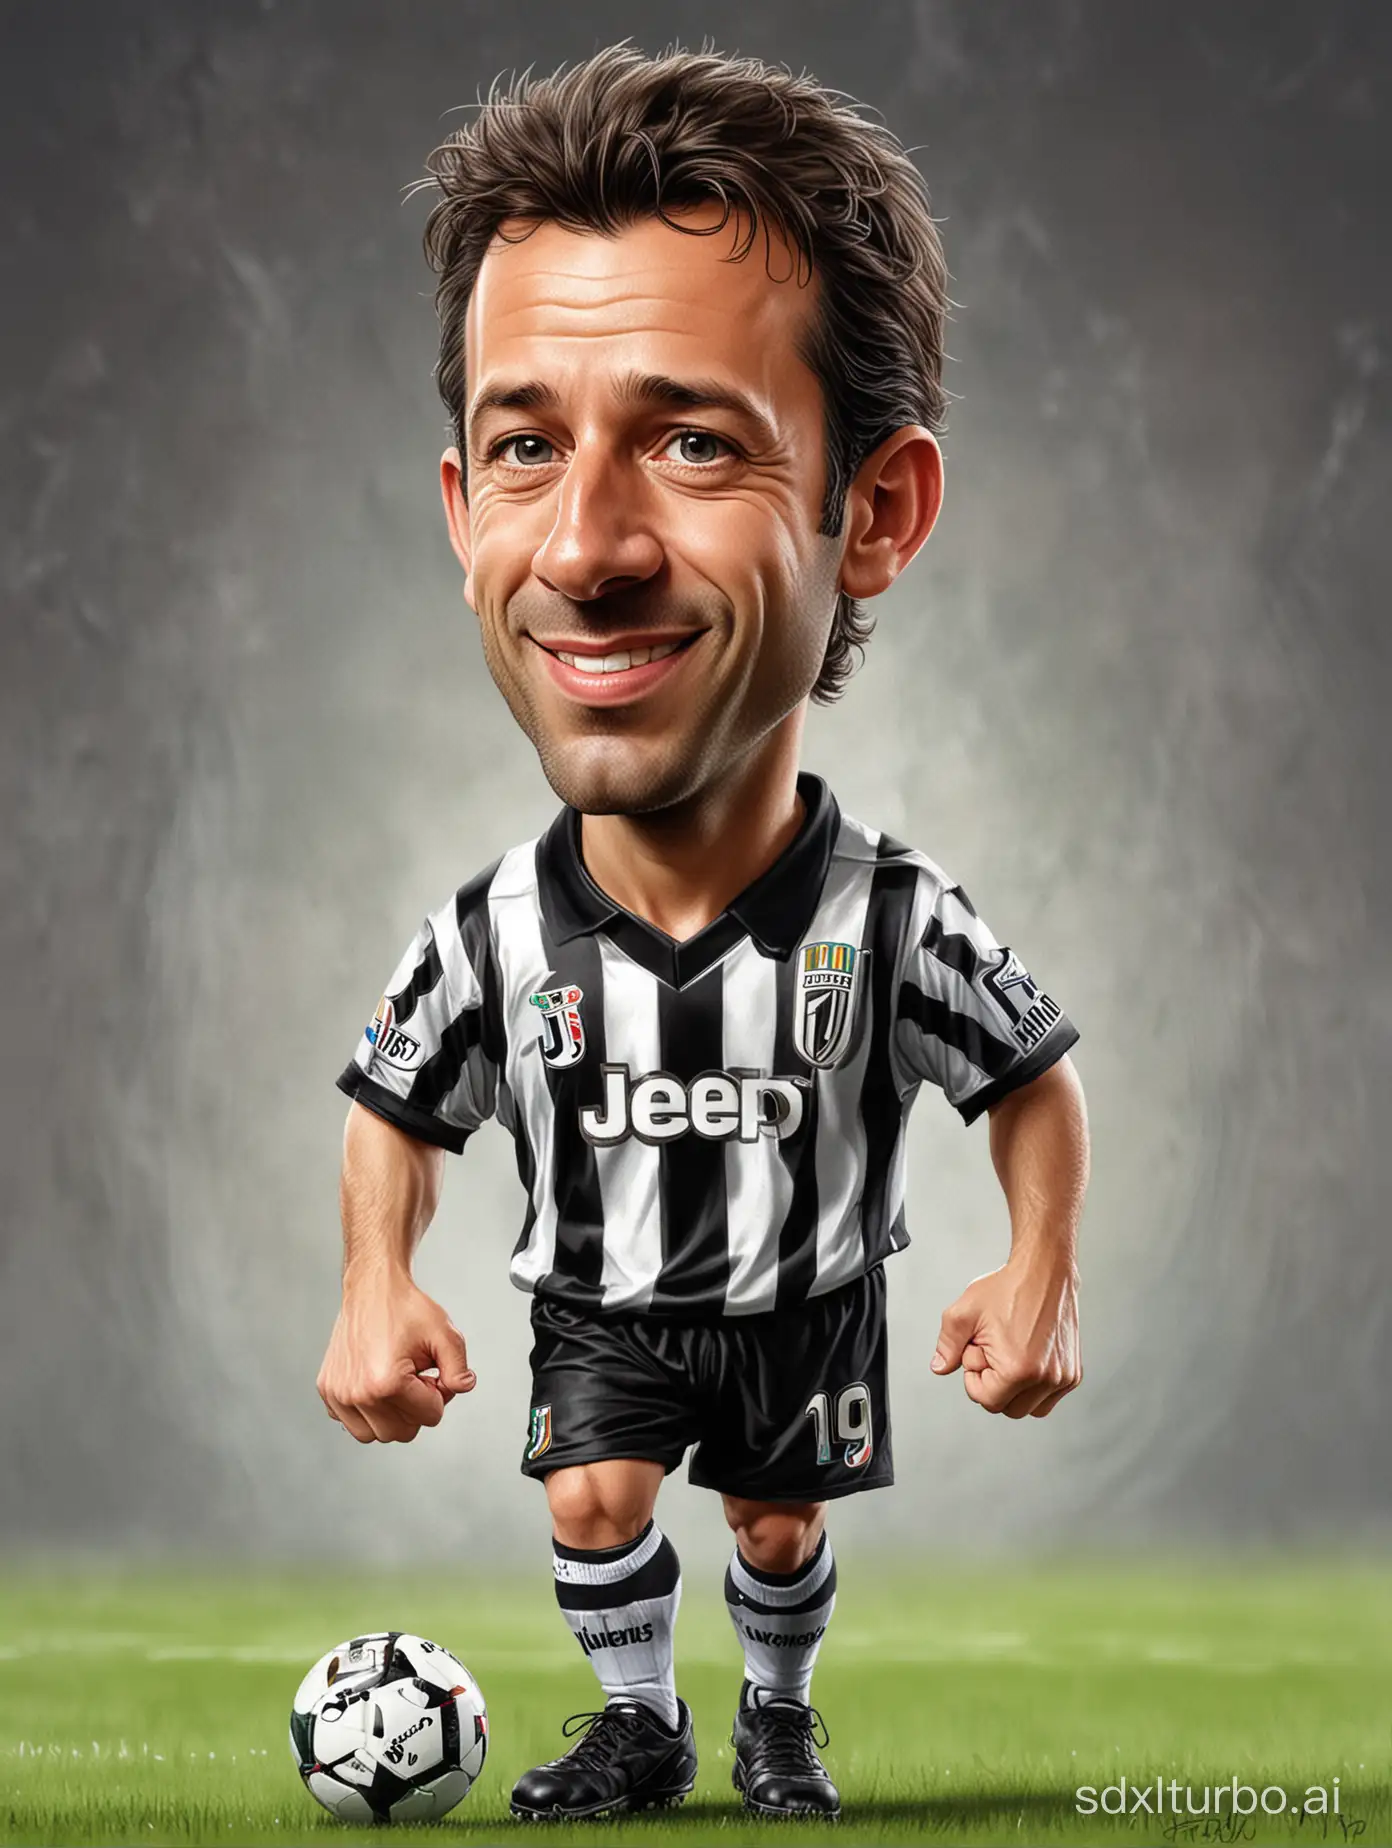 Caricature-Portrait-of-Alex-Del-Piero-in-Juventus-19981999-Jersey